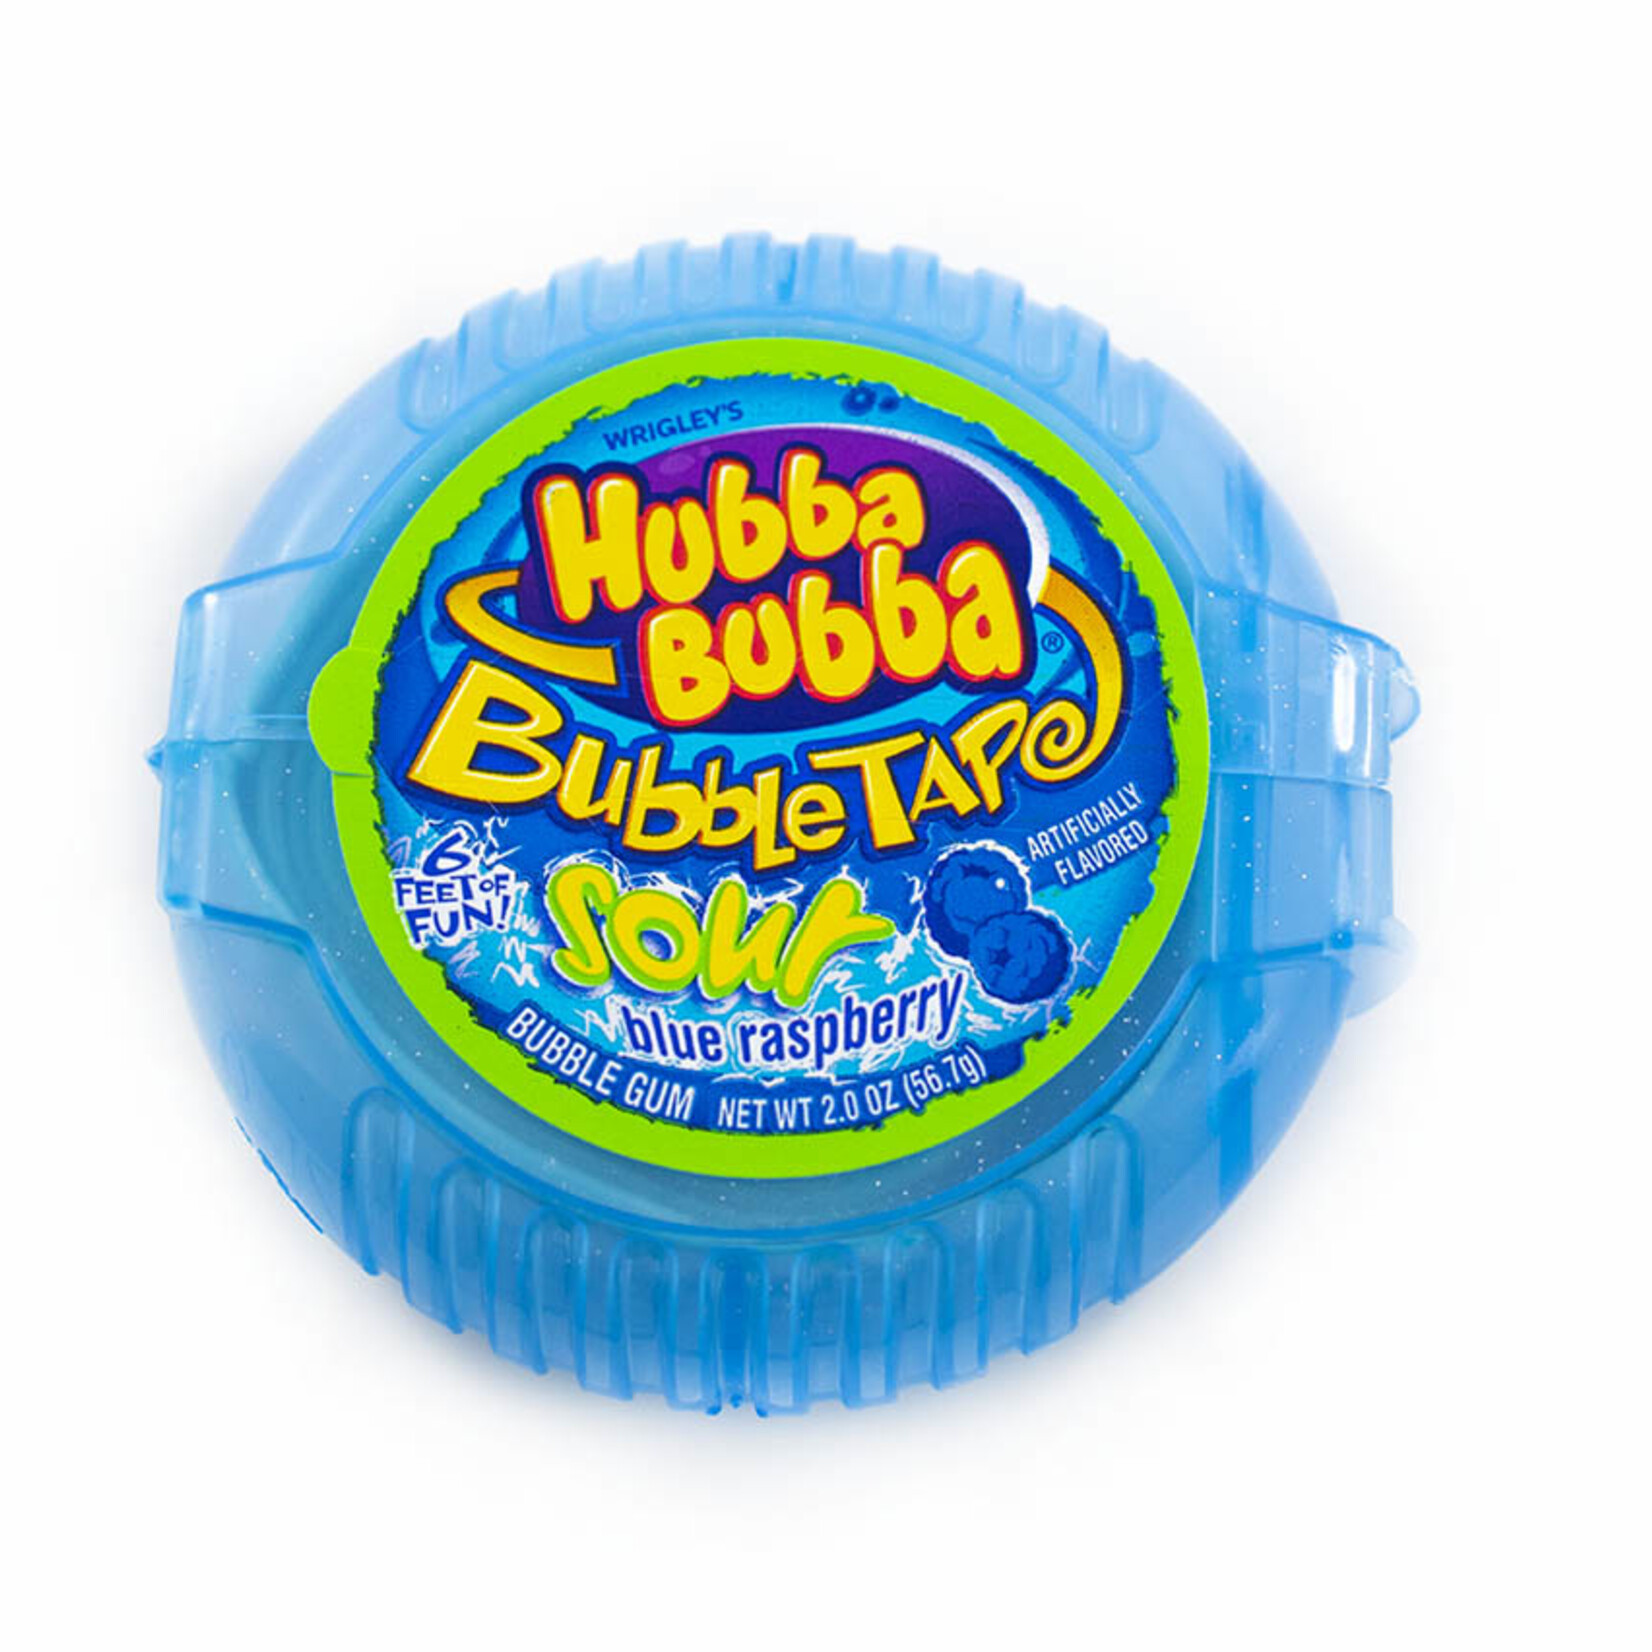 Hubba Bubba sour blue raspberry bubble gum 56.7g